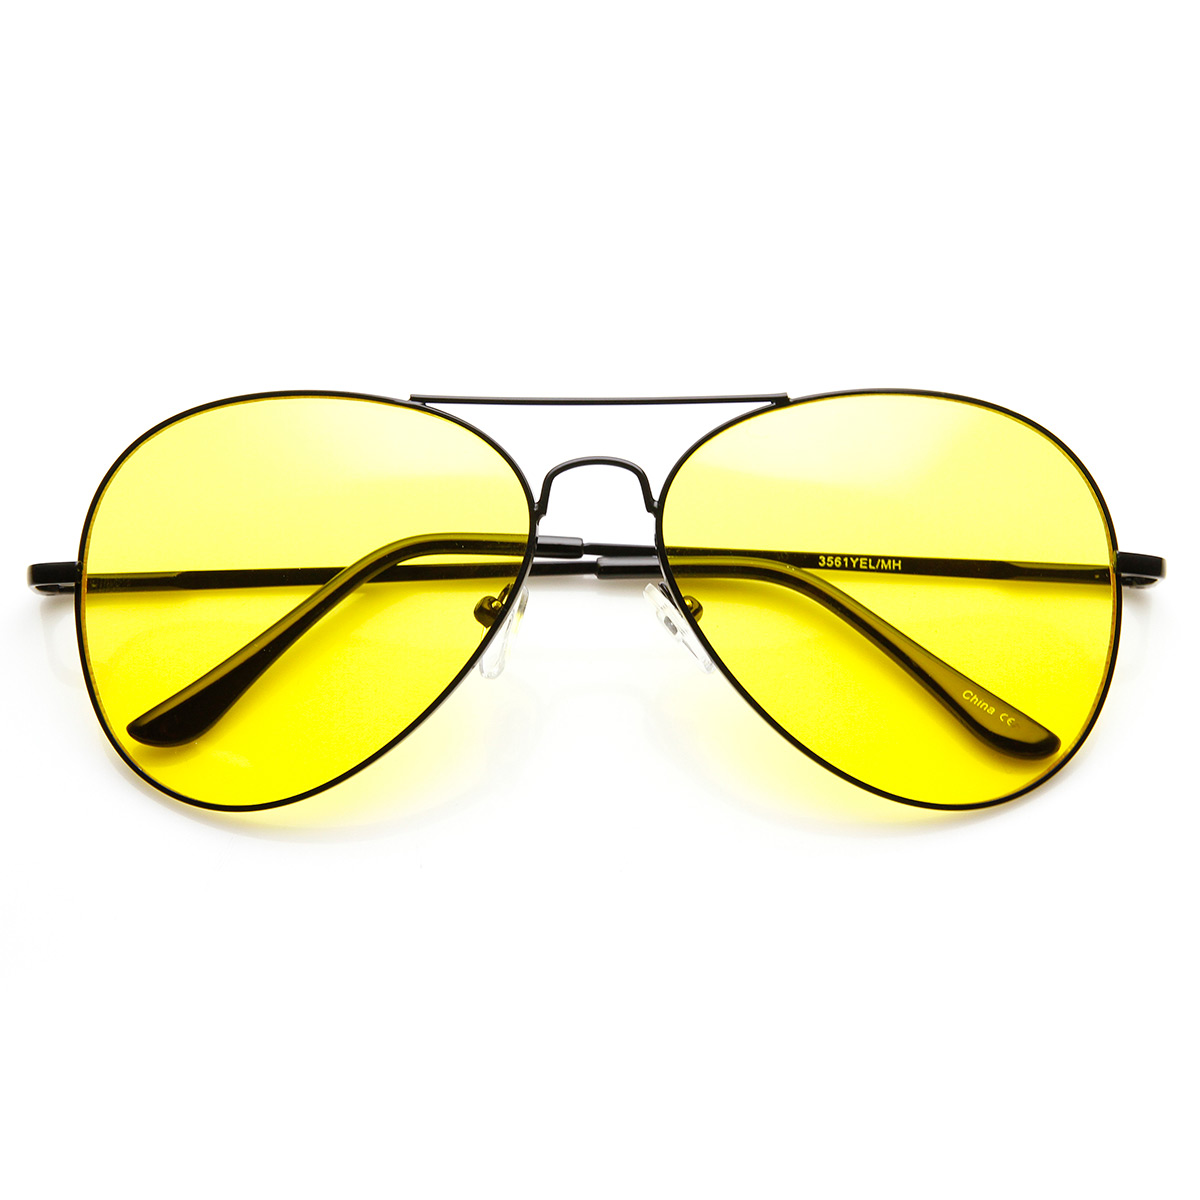 Sunglassla Classic Metal Frame Yellow Tinted Night Driving Aviator Sunglasses Ebay